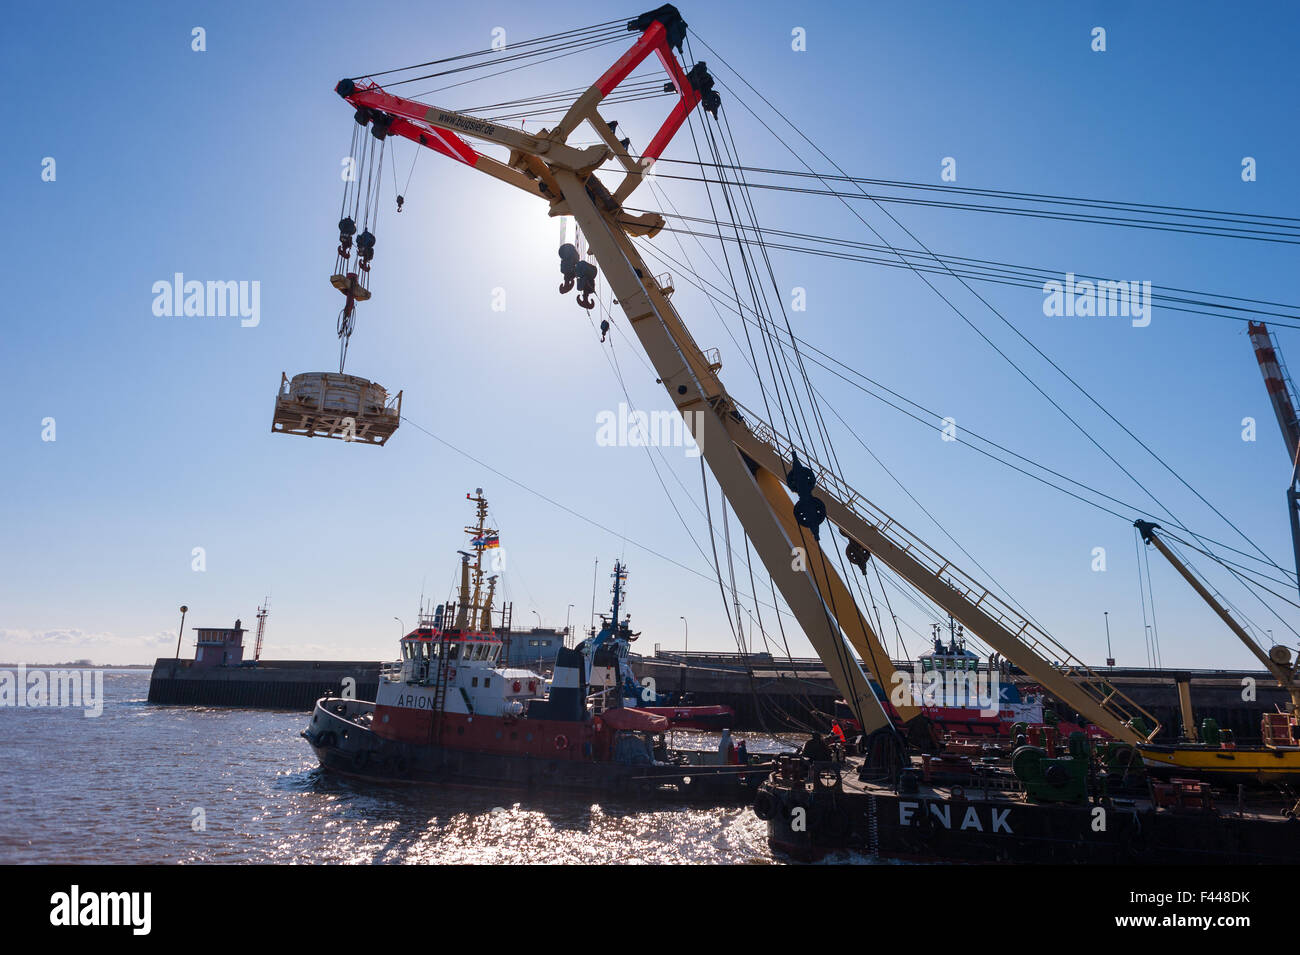 Floating crane Enak Stock Photo